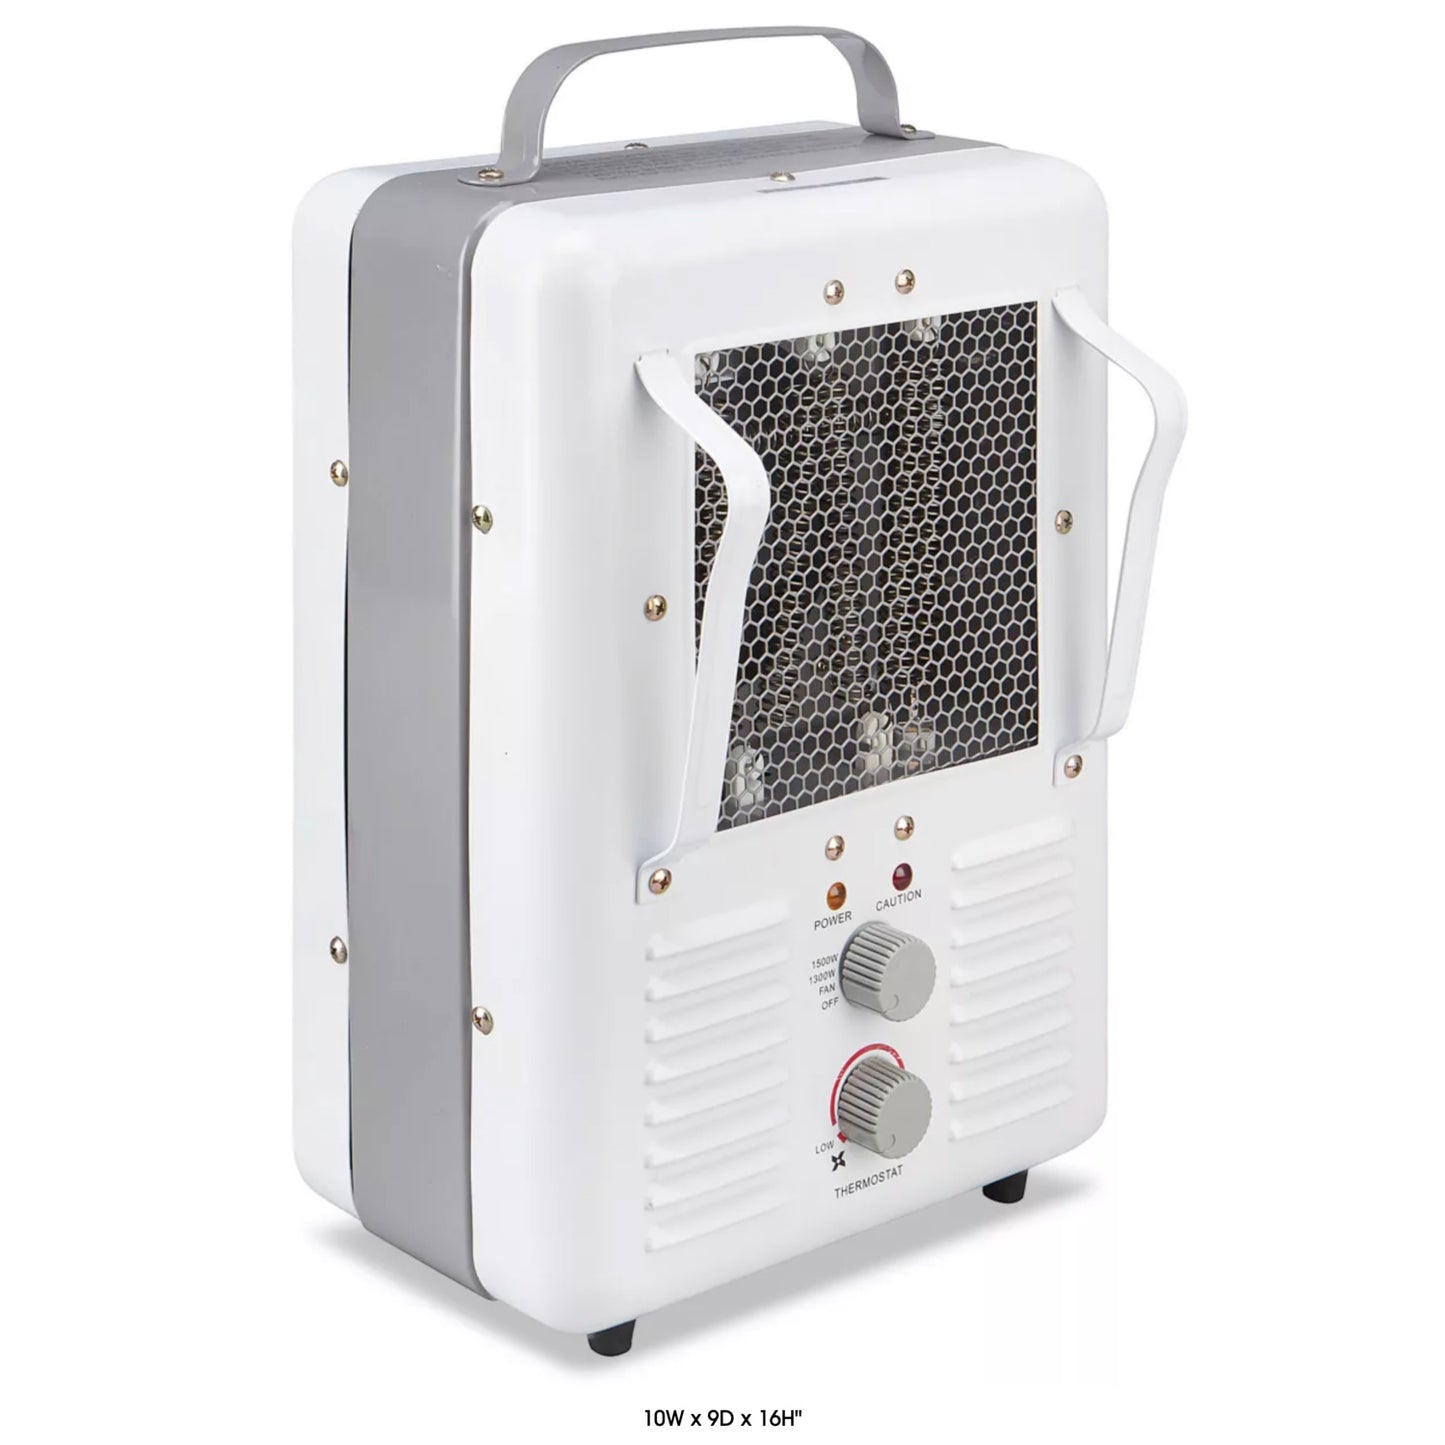 Uline | Portable 1500W Electric Heater